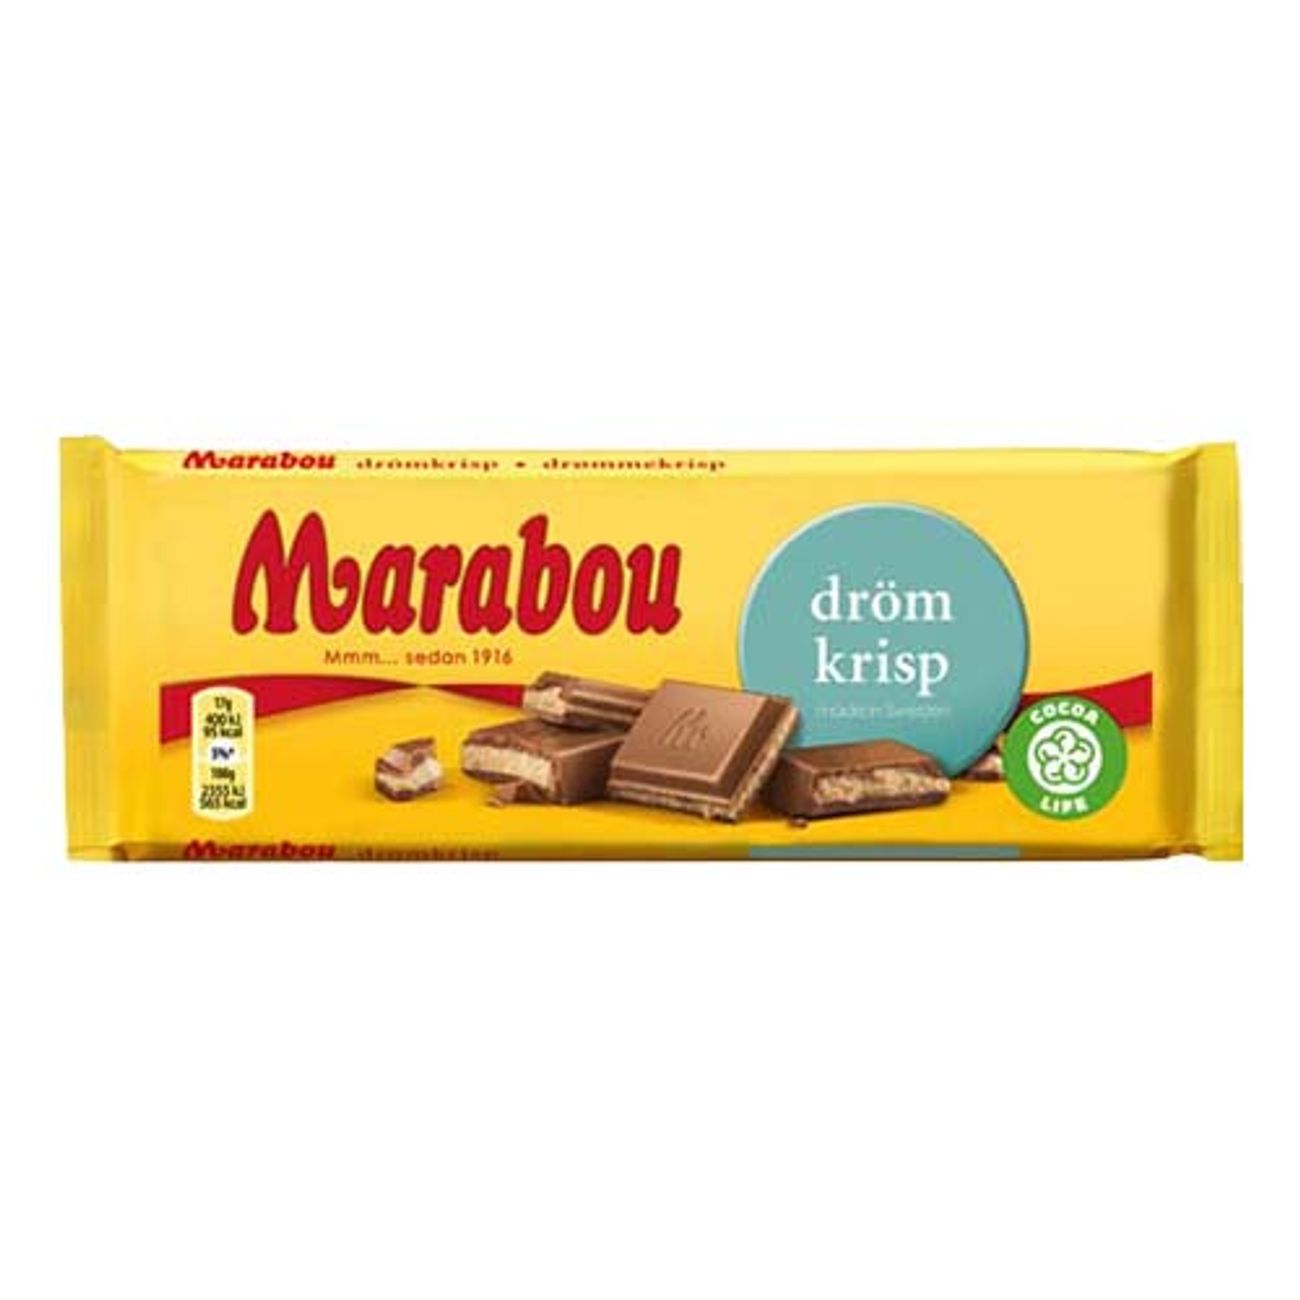 marabou-dromkrisp-1